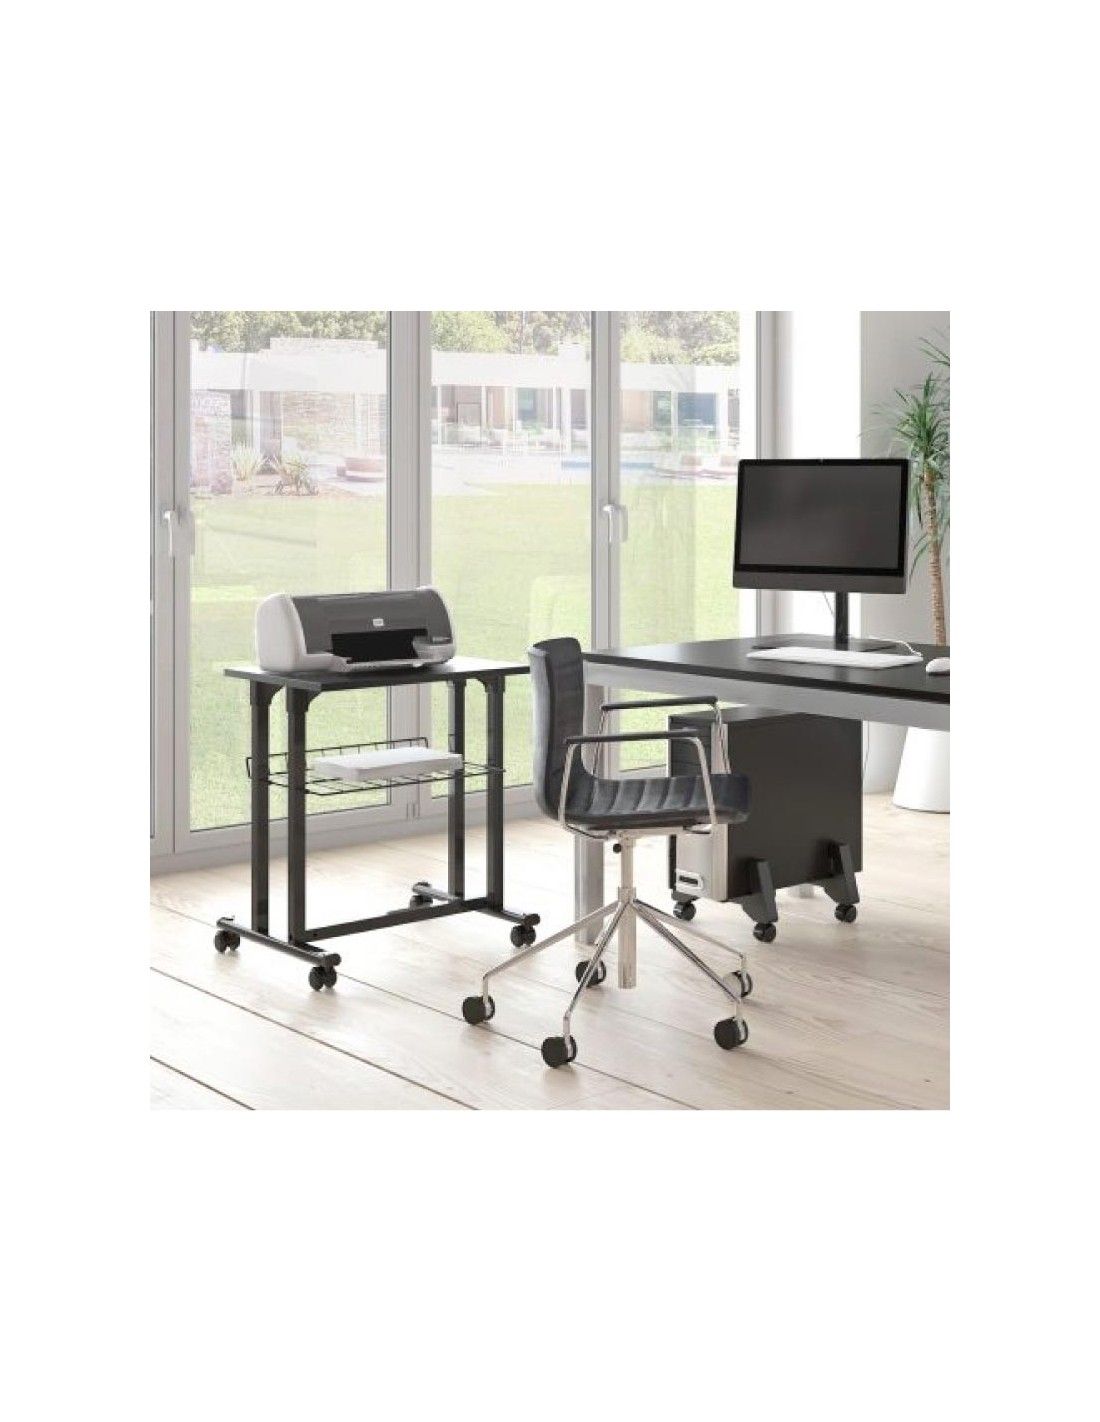 Muebles para computadora e impresora desk para escritorio barato y